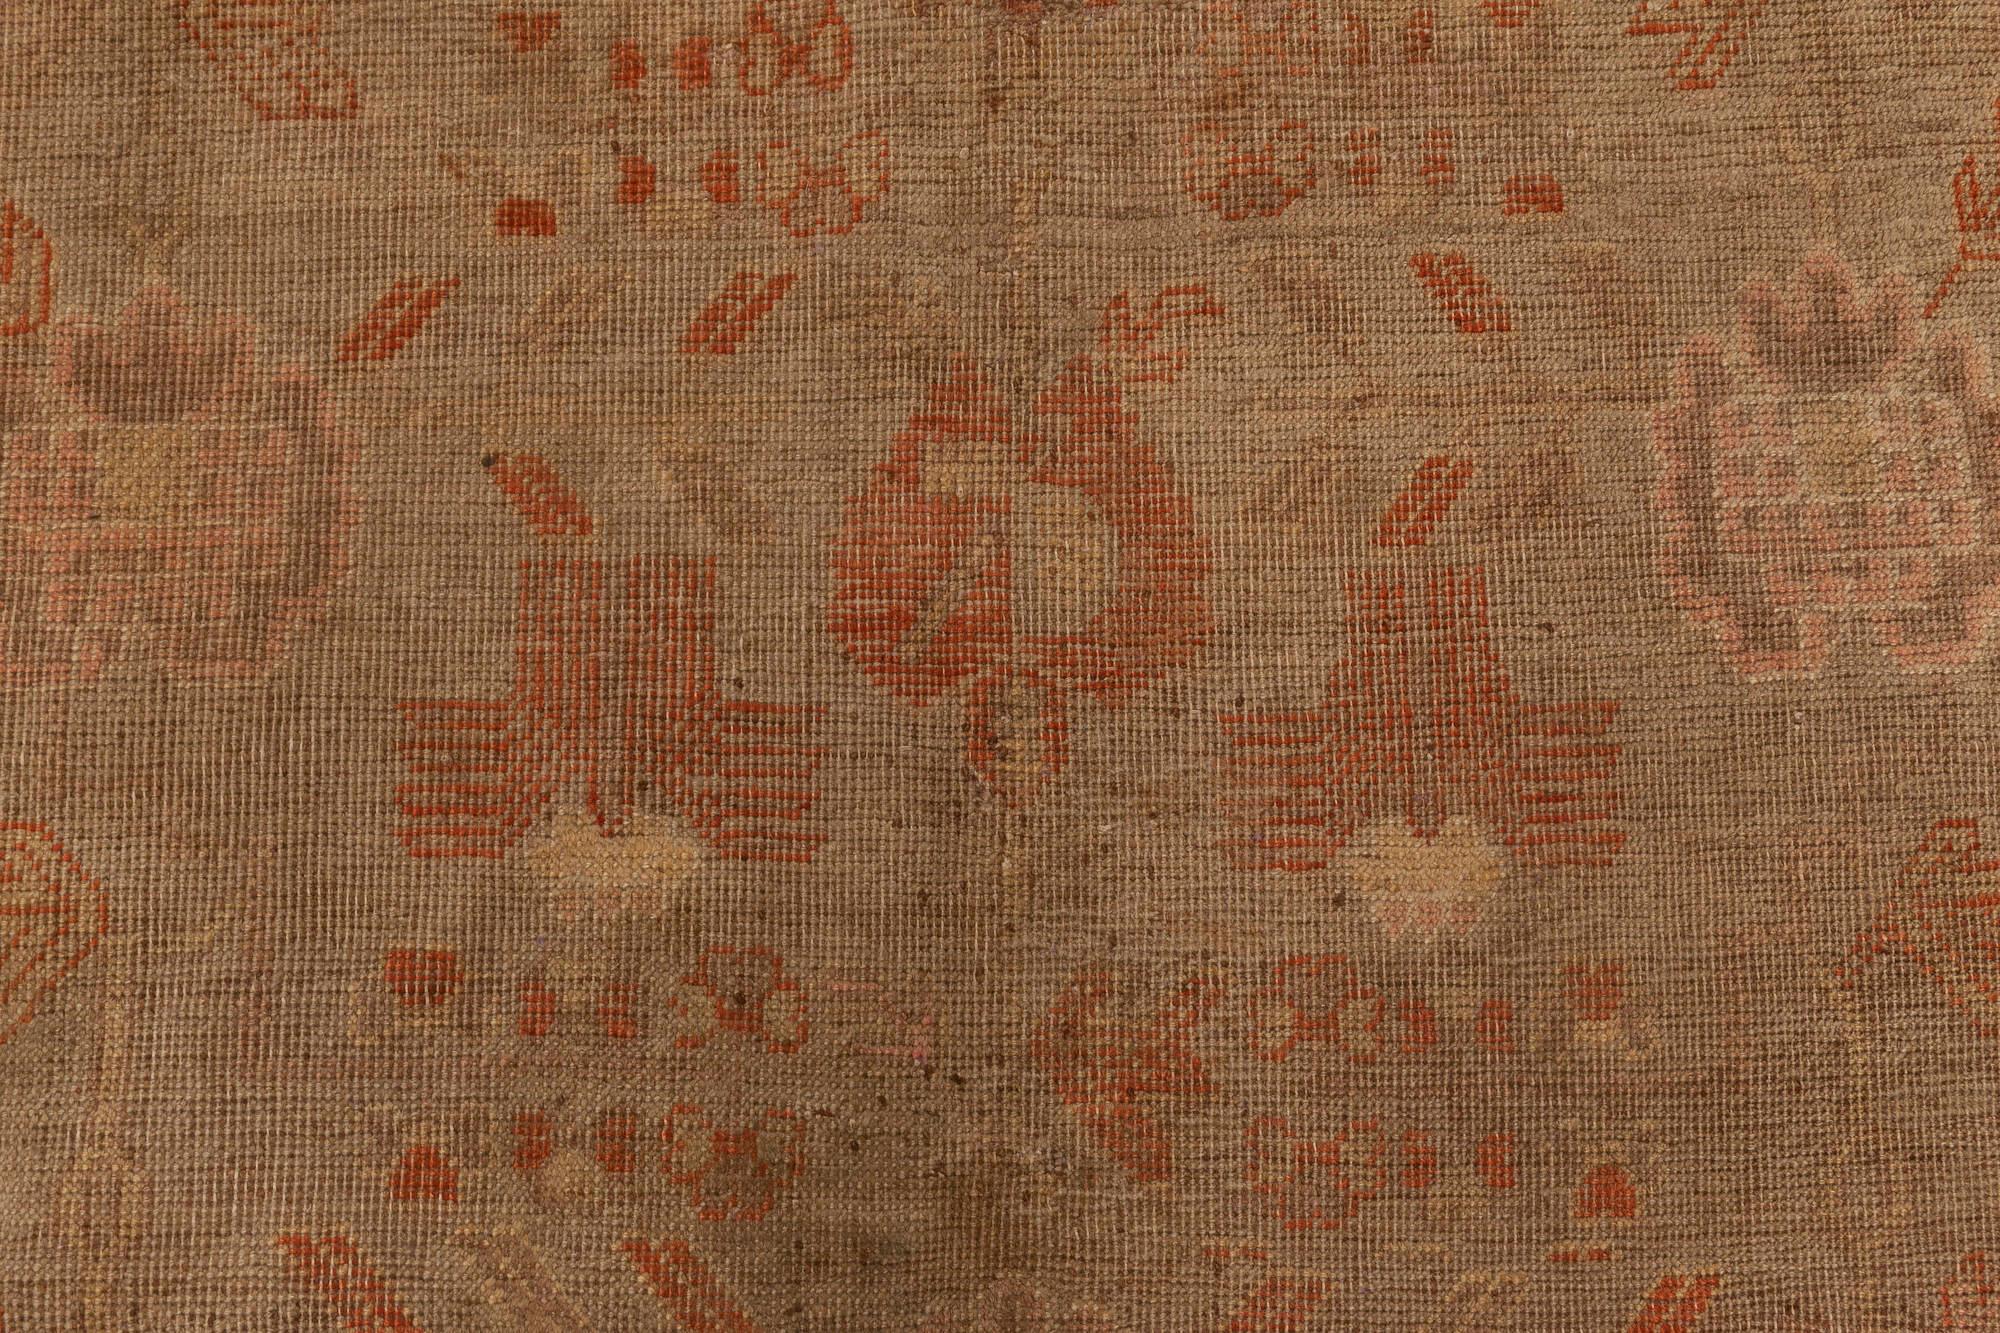 Mid-20th century Samarkand Handmade Wool Rug
Size: 4'3